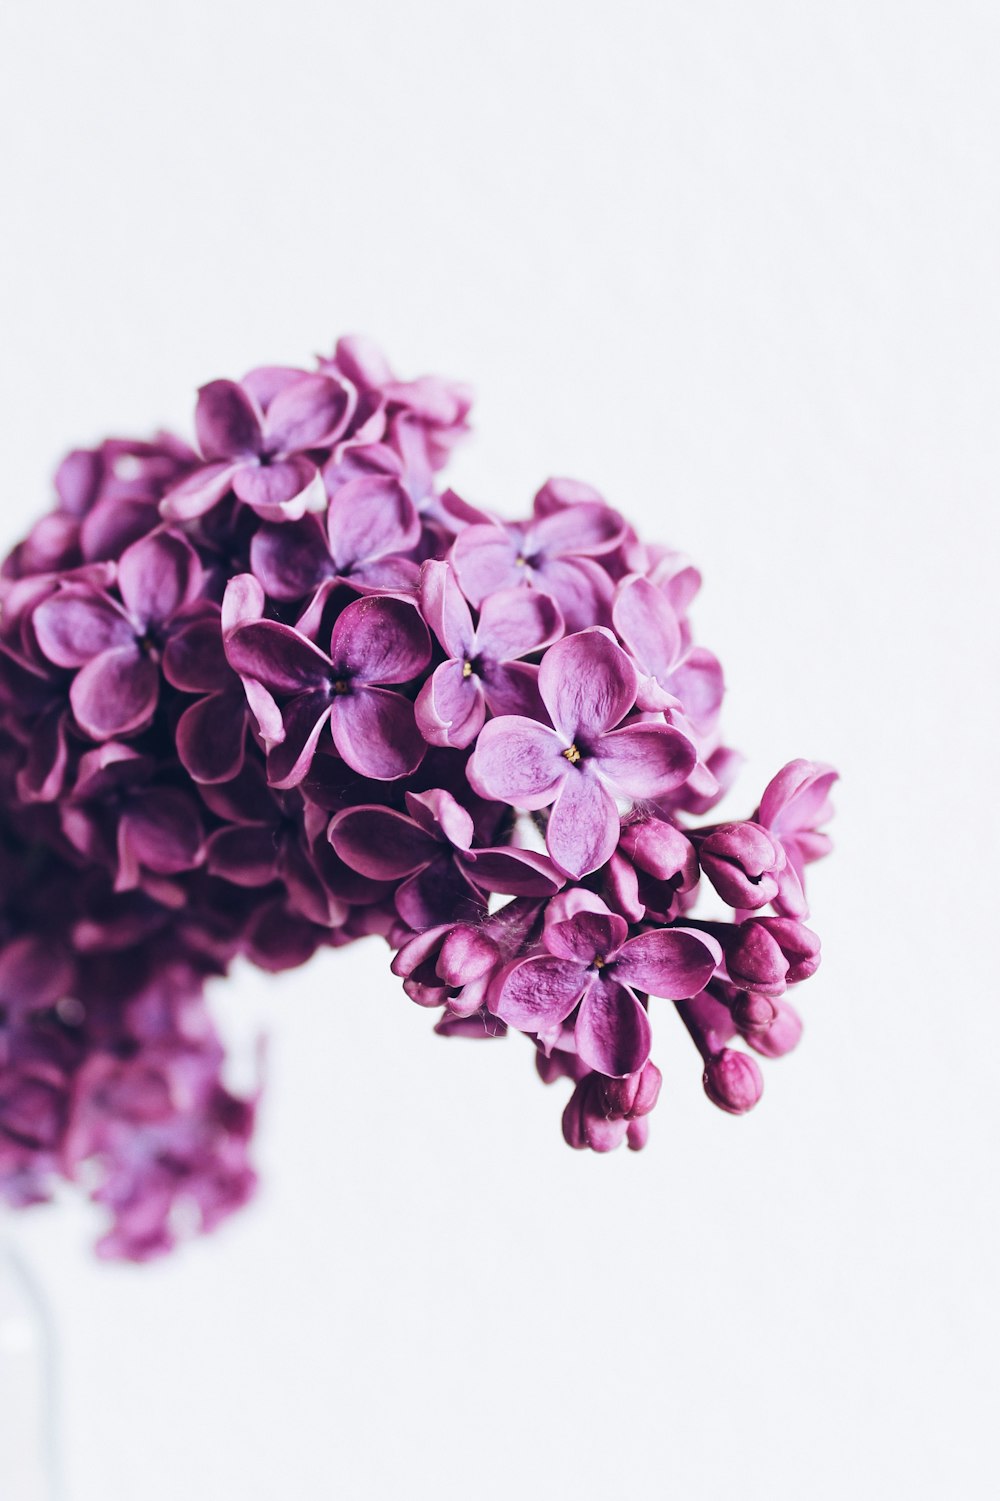 Fotografía de enfoque selectivo de flores púrpuras